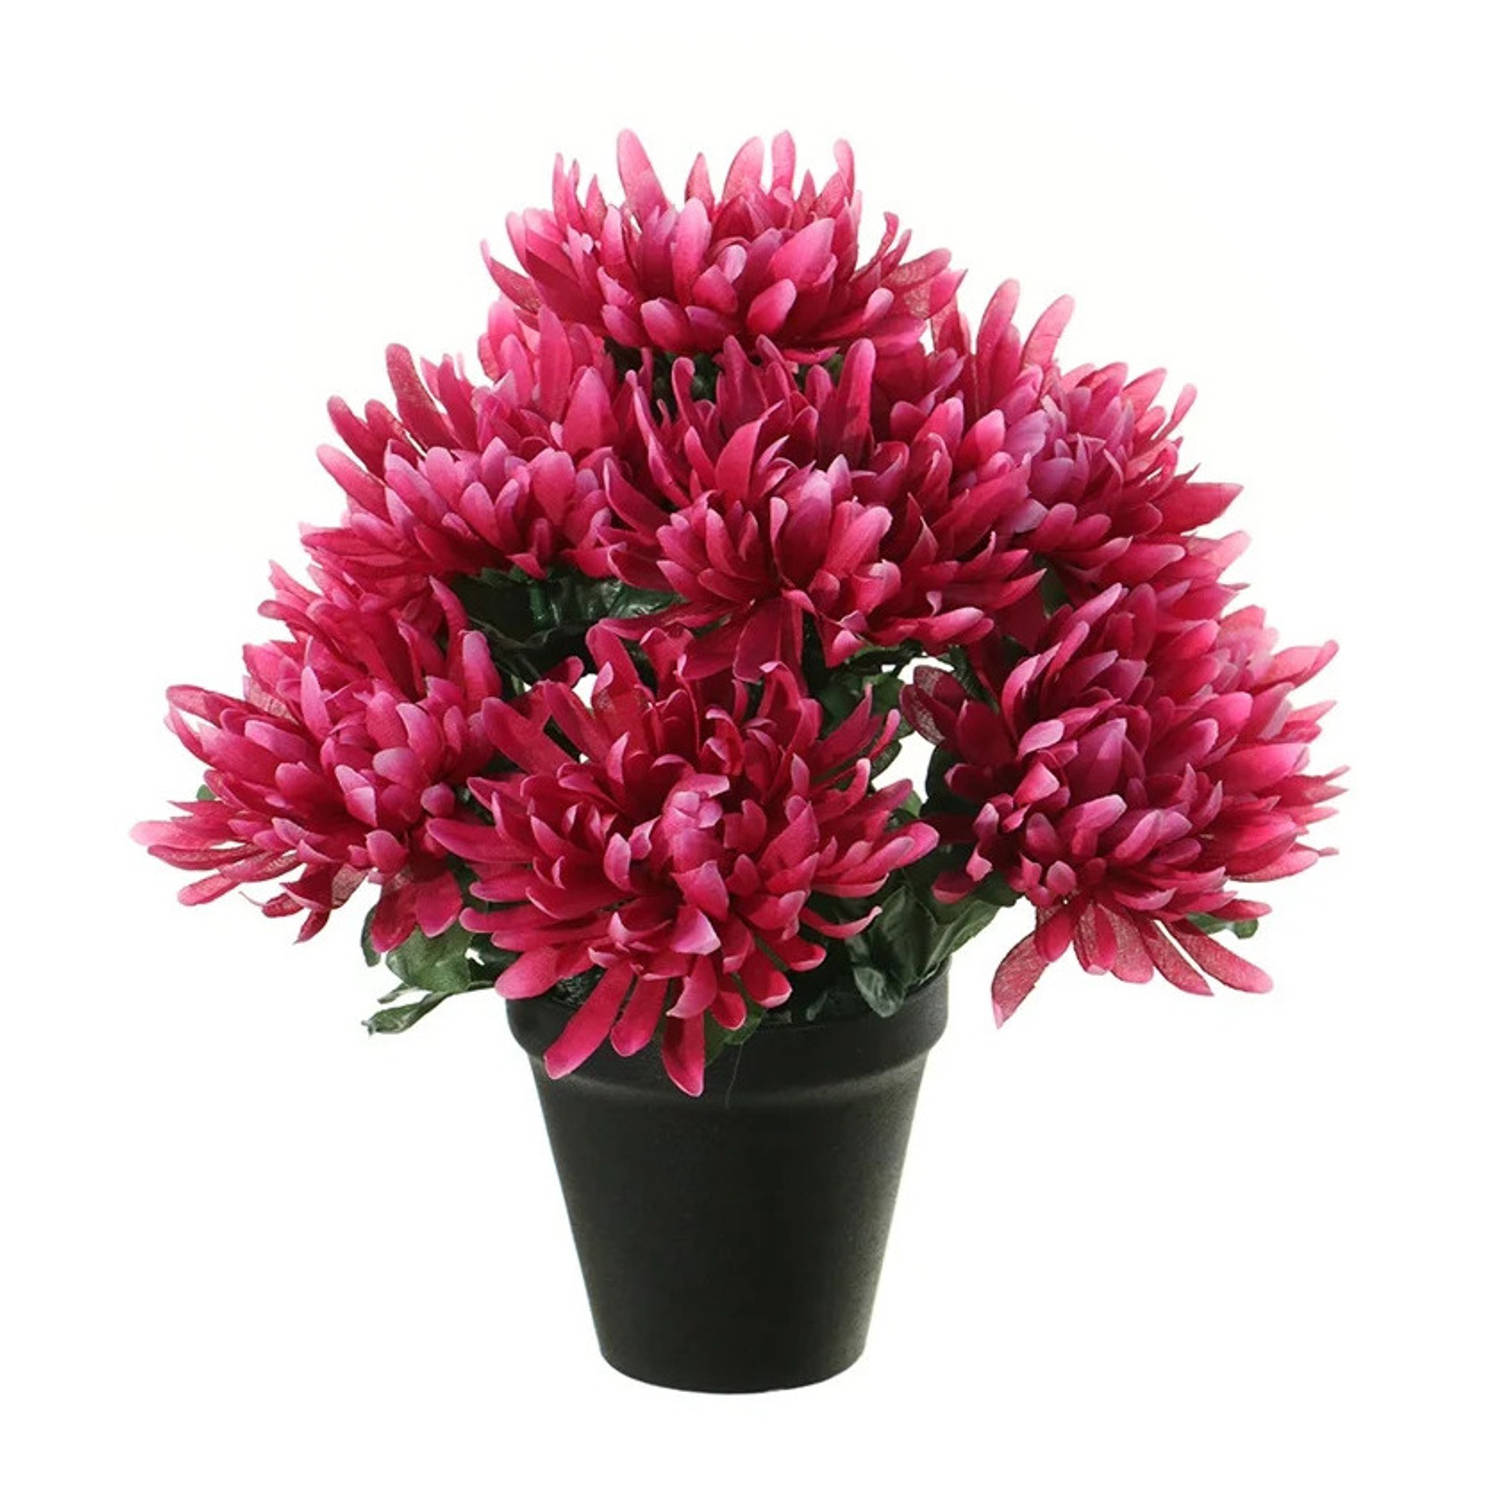 Louis Maes Kunstbloemen plant in pot - cerise roze tinten - 28 cm - Bloemenstuk ornament - Chrysanten